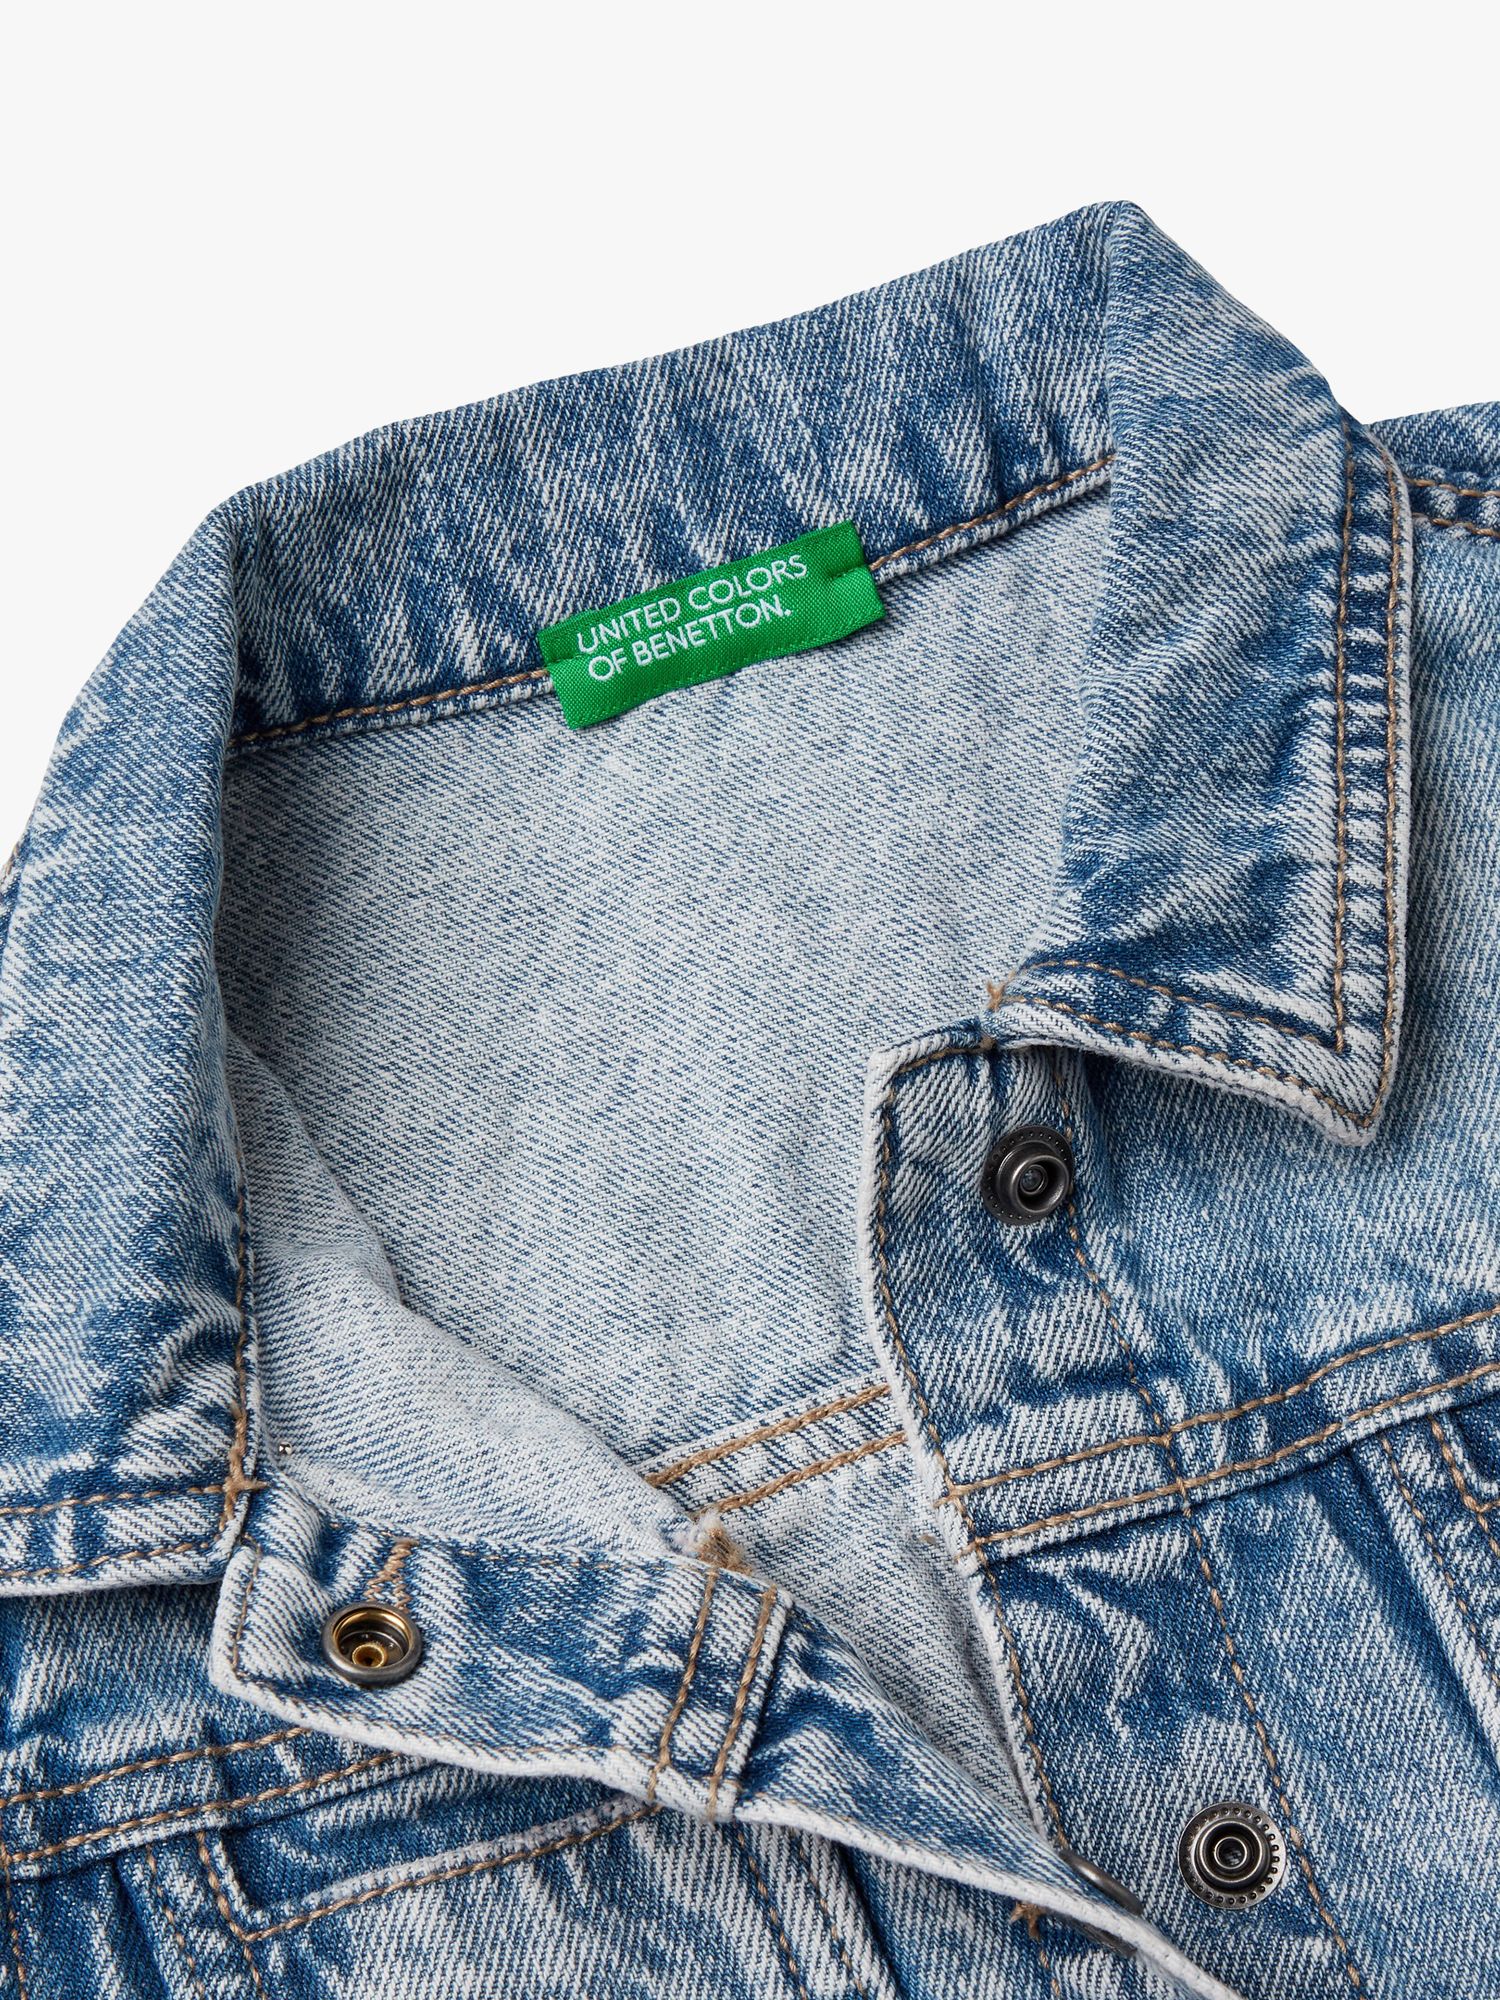 Buy Benetton Kids' Sleeveless Frill Denim Jacket, Blue Online at johnlewis.com